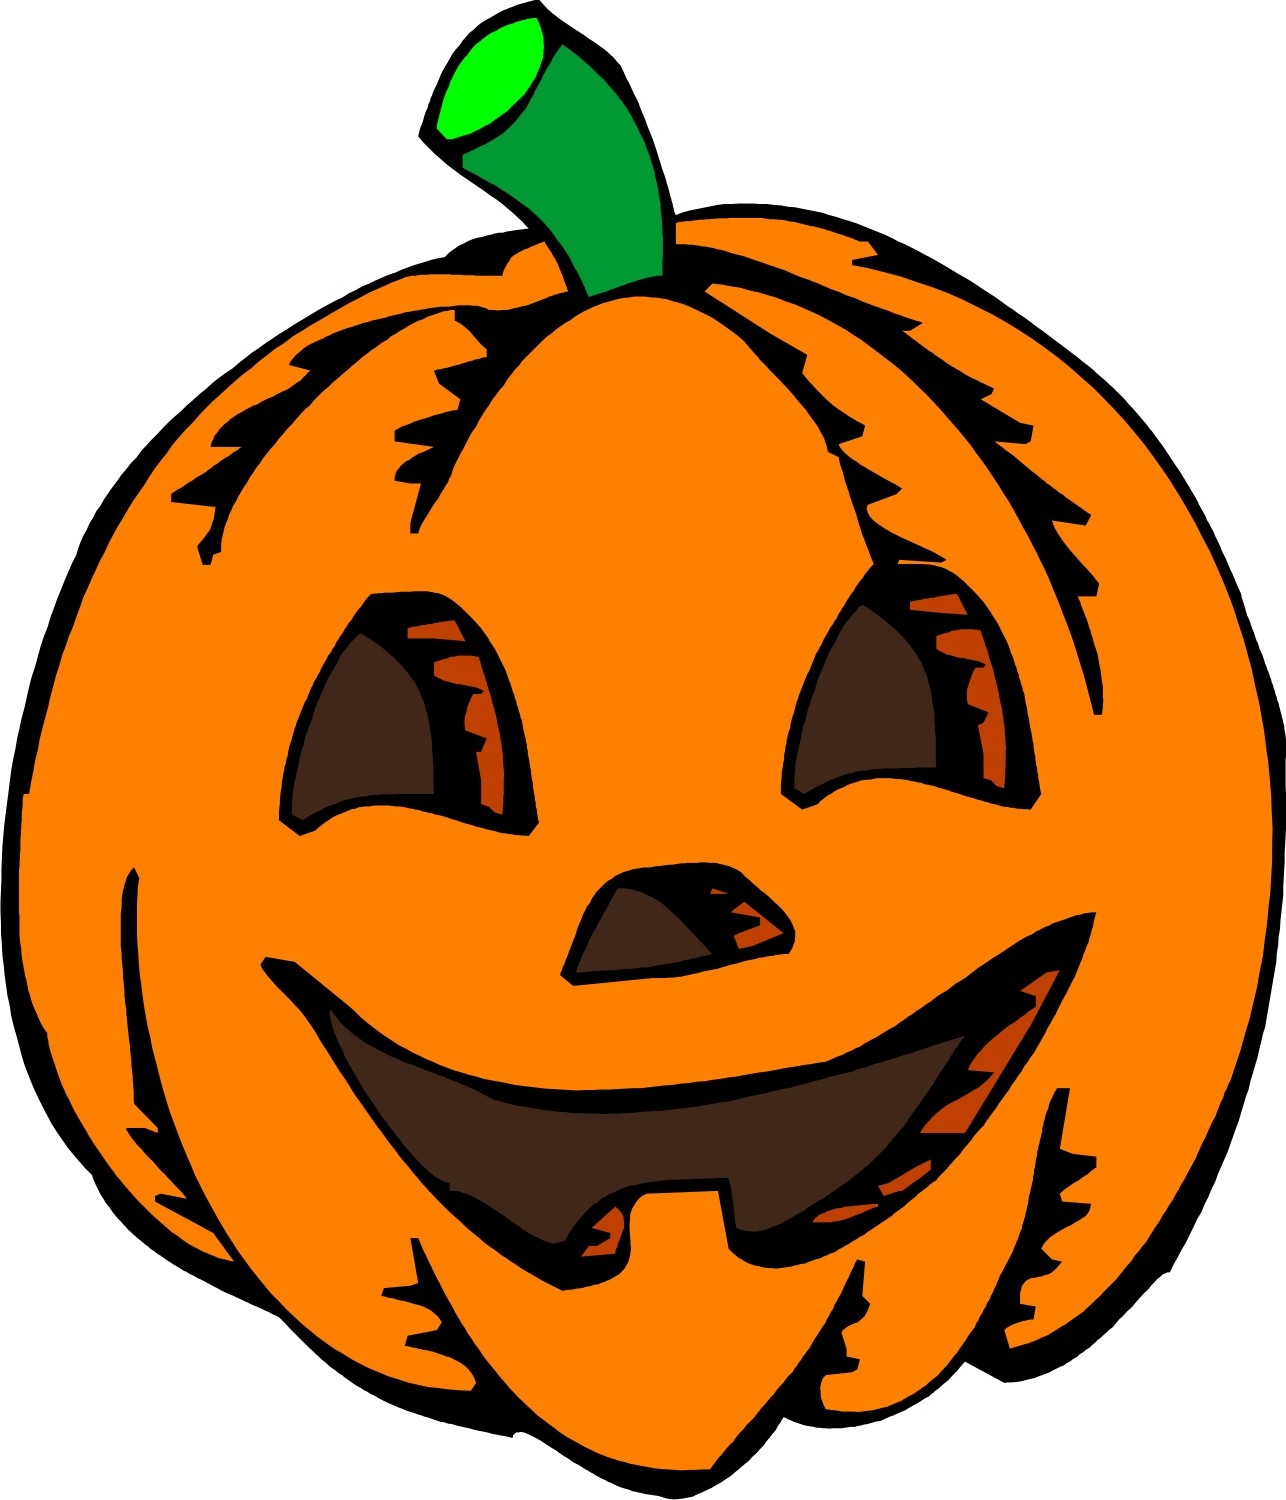 Clip Arts Related To : halloween pumpkin transparent. view all Spooky Pumpk...